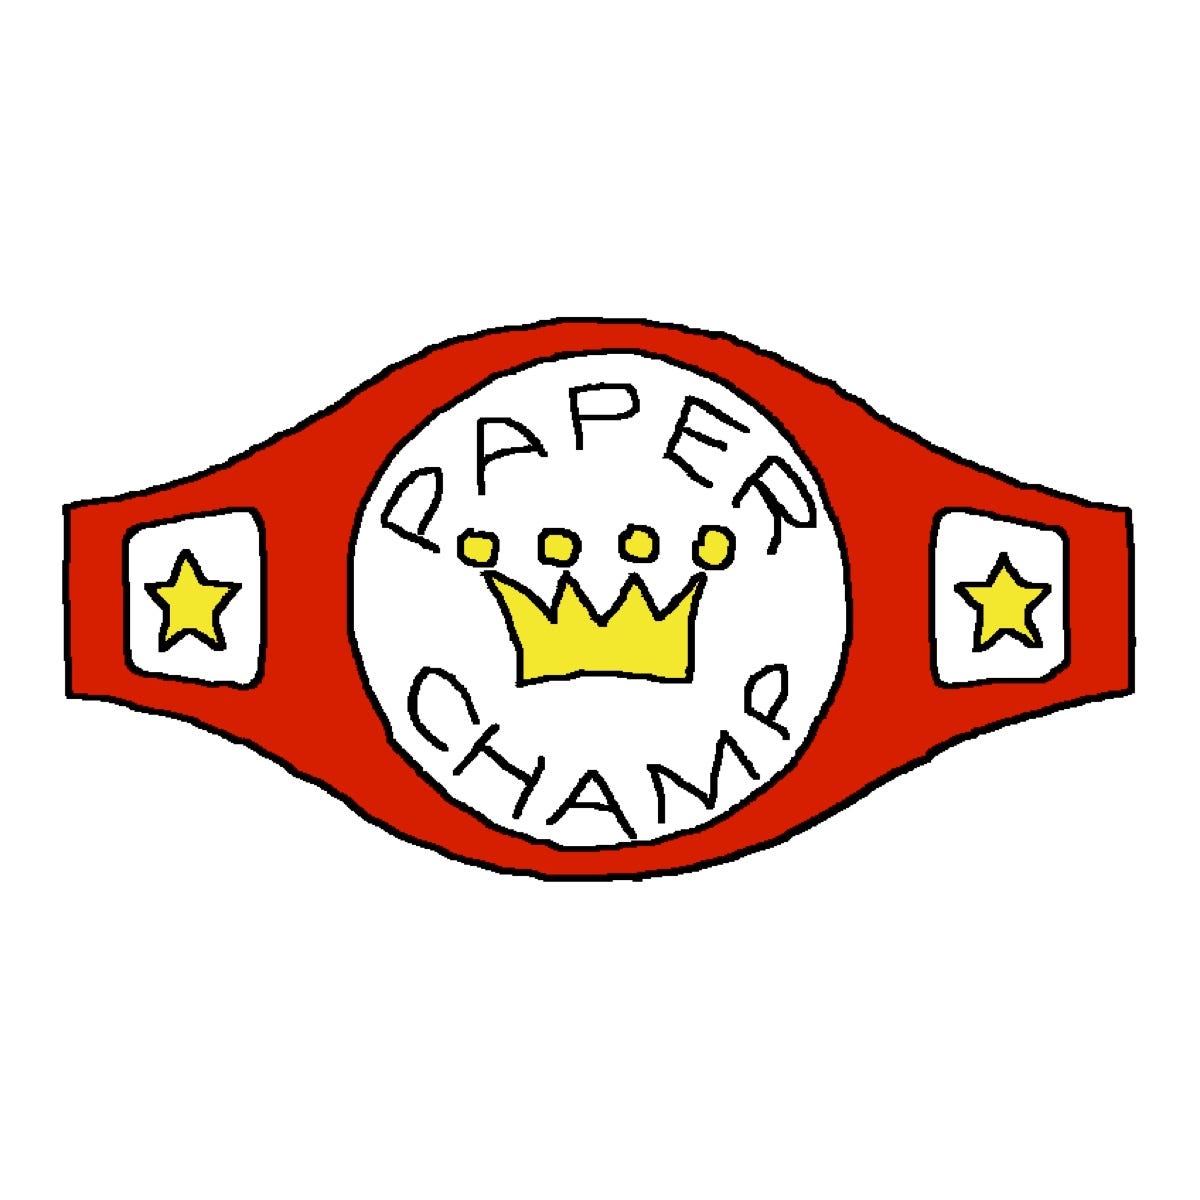 Paper Champ Dave – Medium